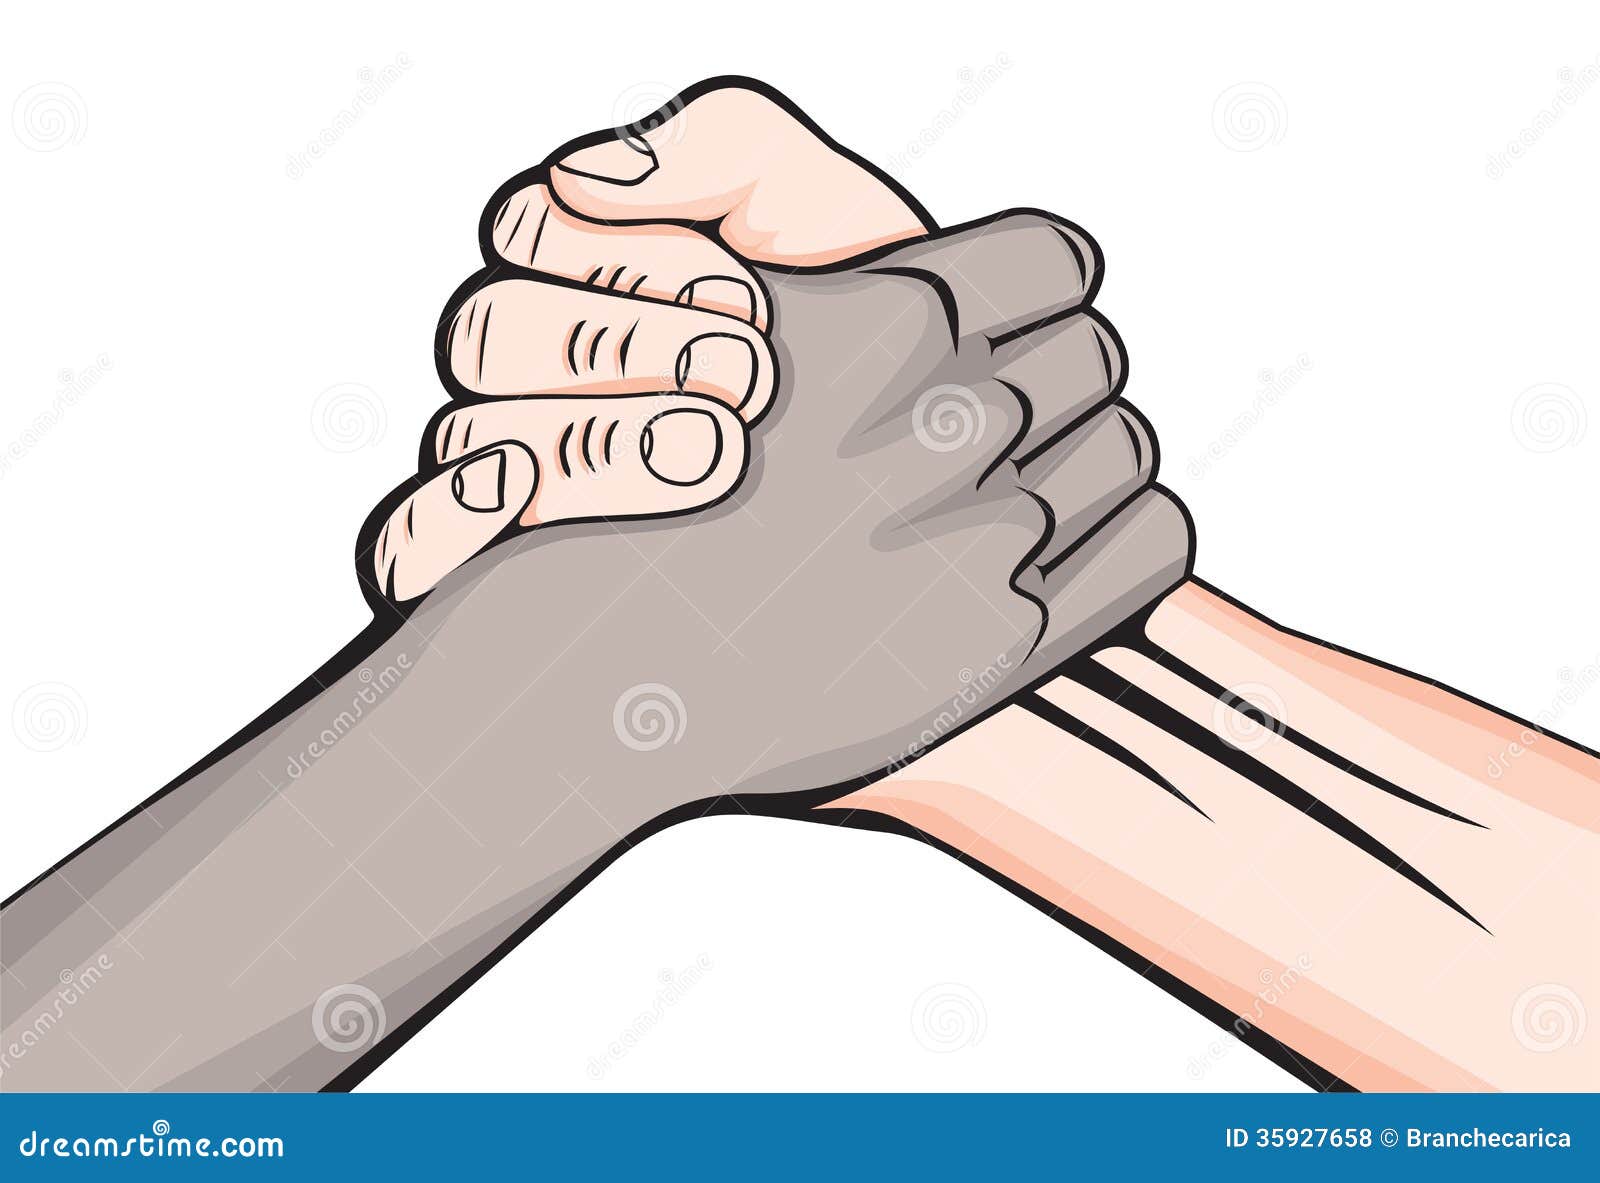 handshake clipart free download - photo #19